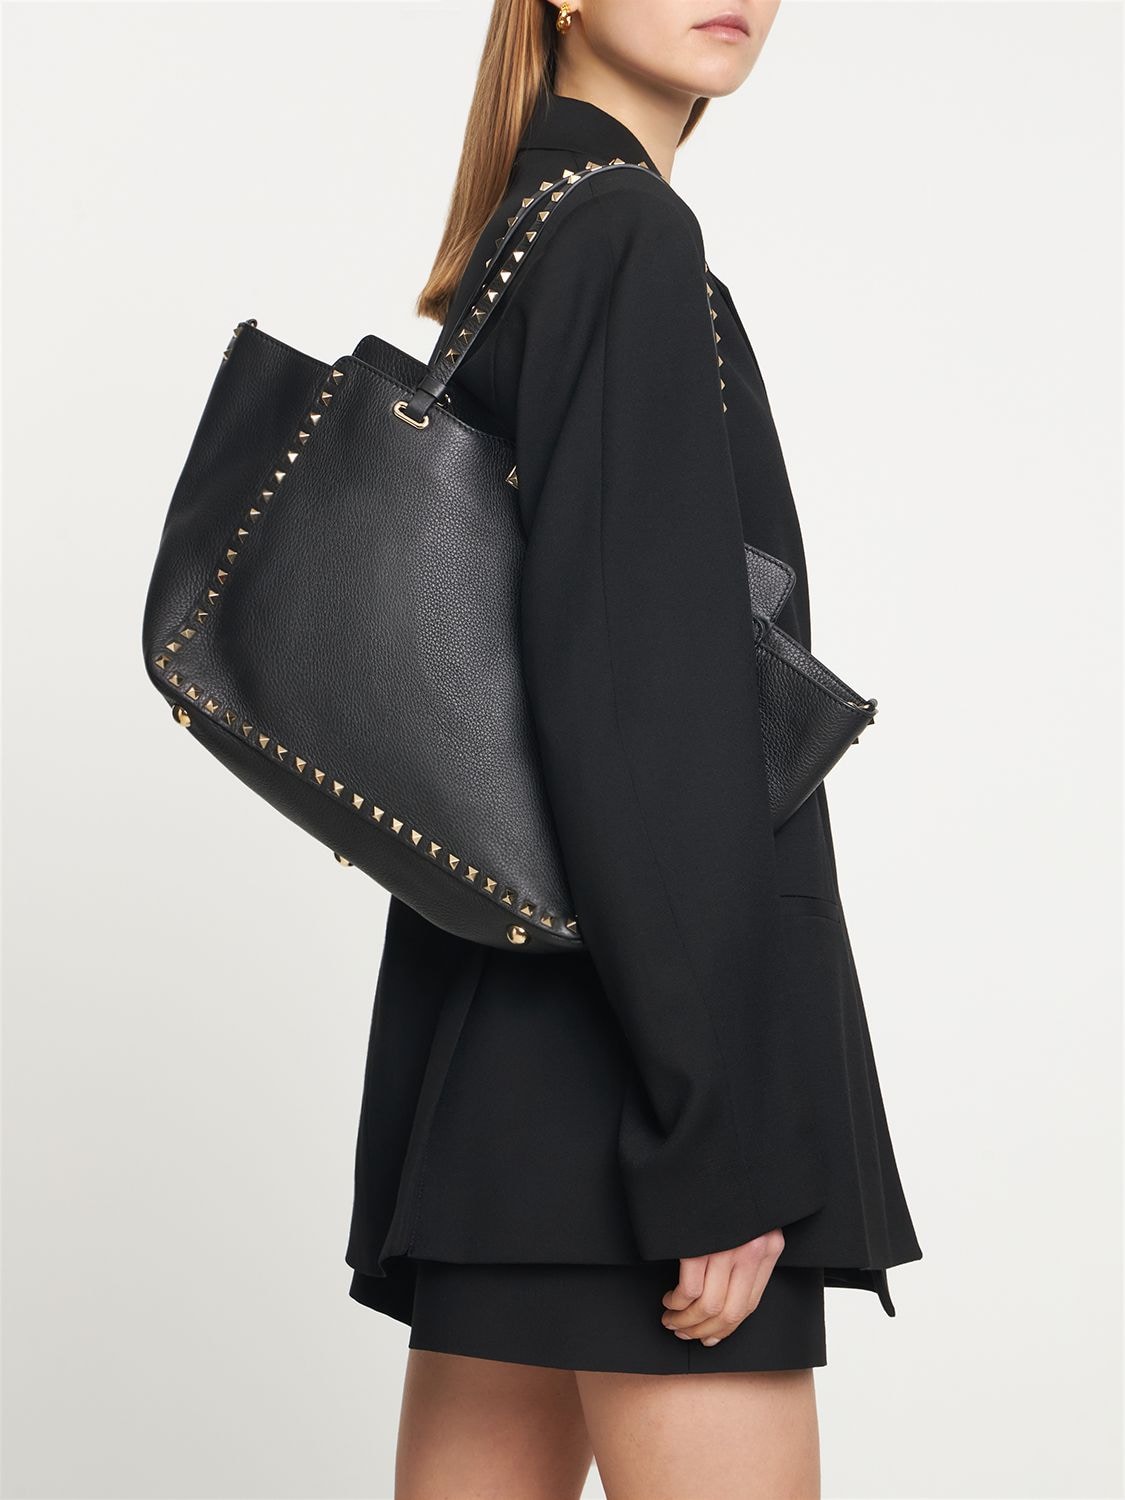 Shop Valentino Rockstud Medium Leather Tote Bag In Black